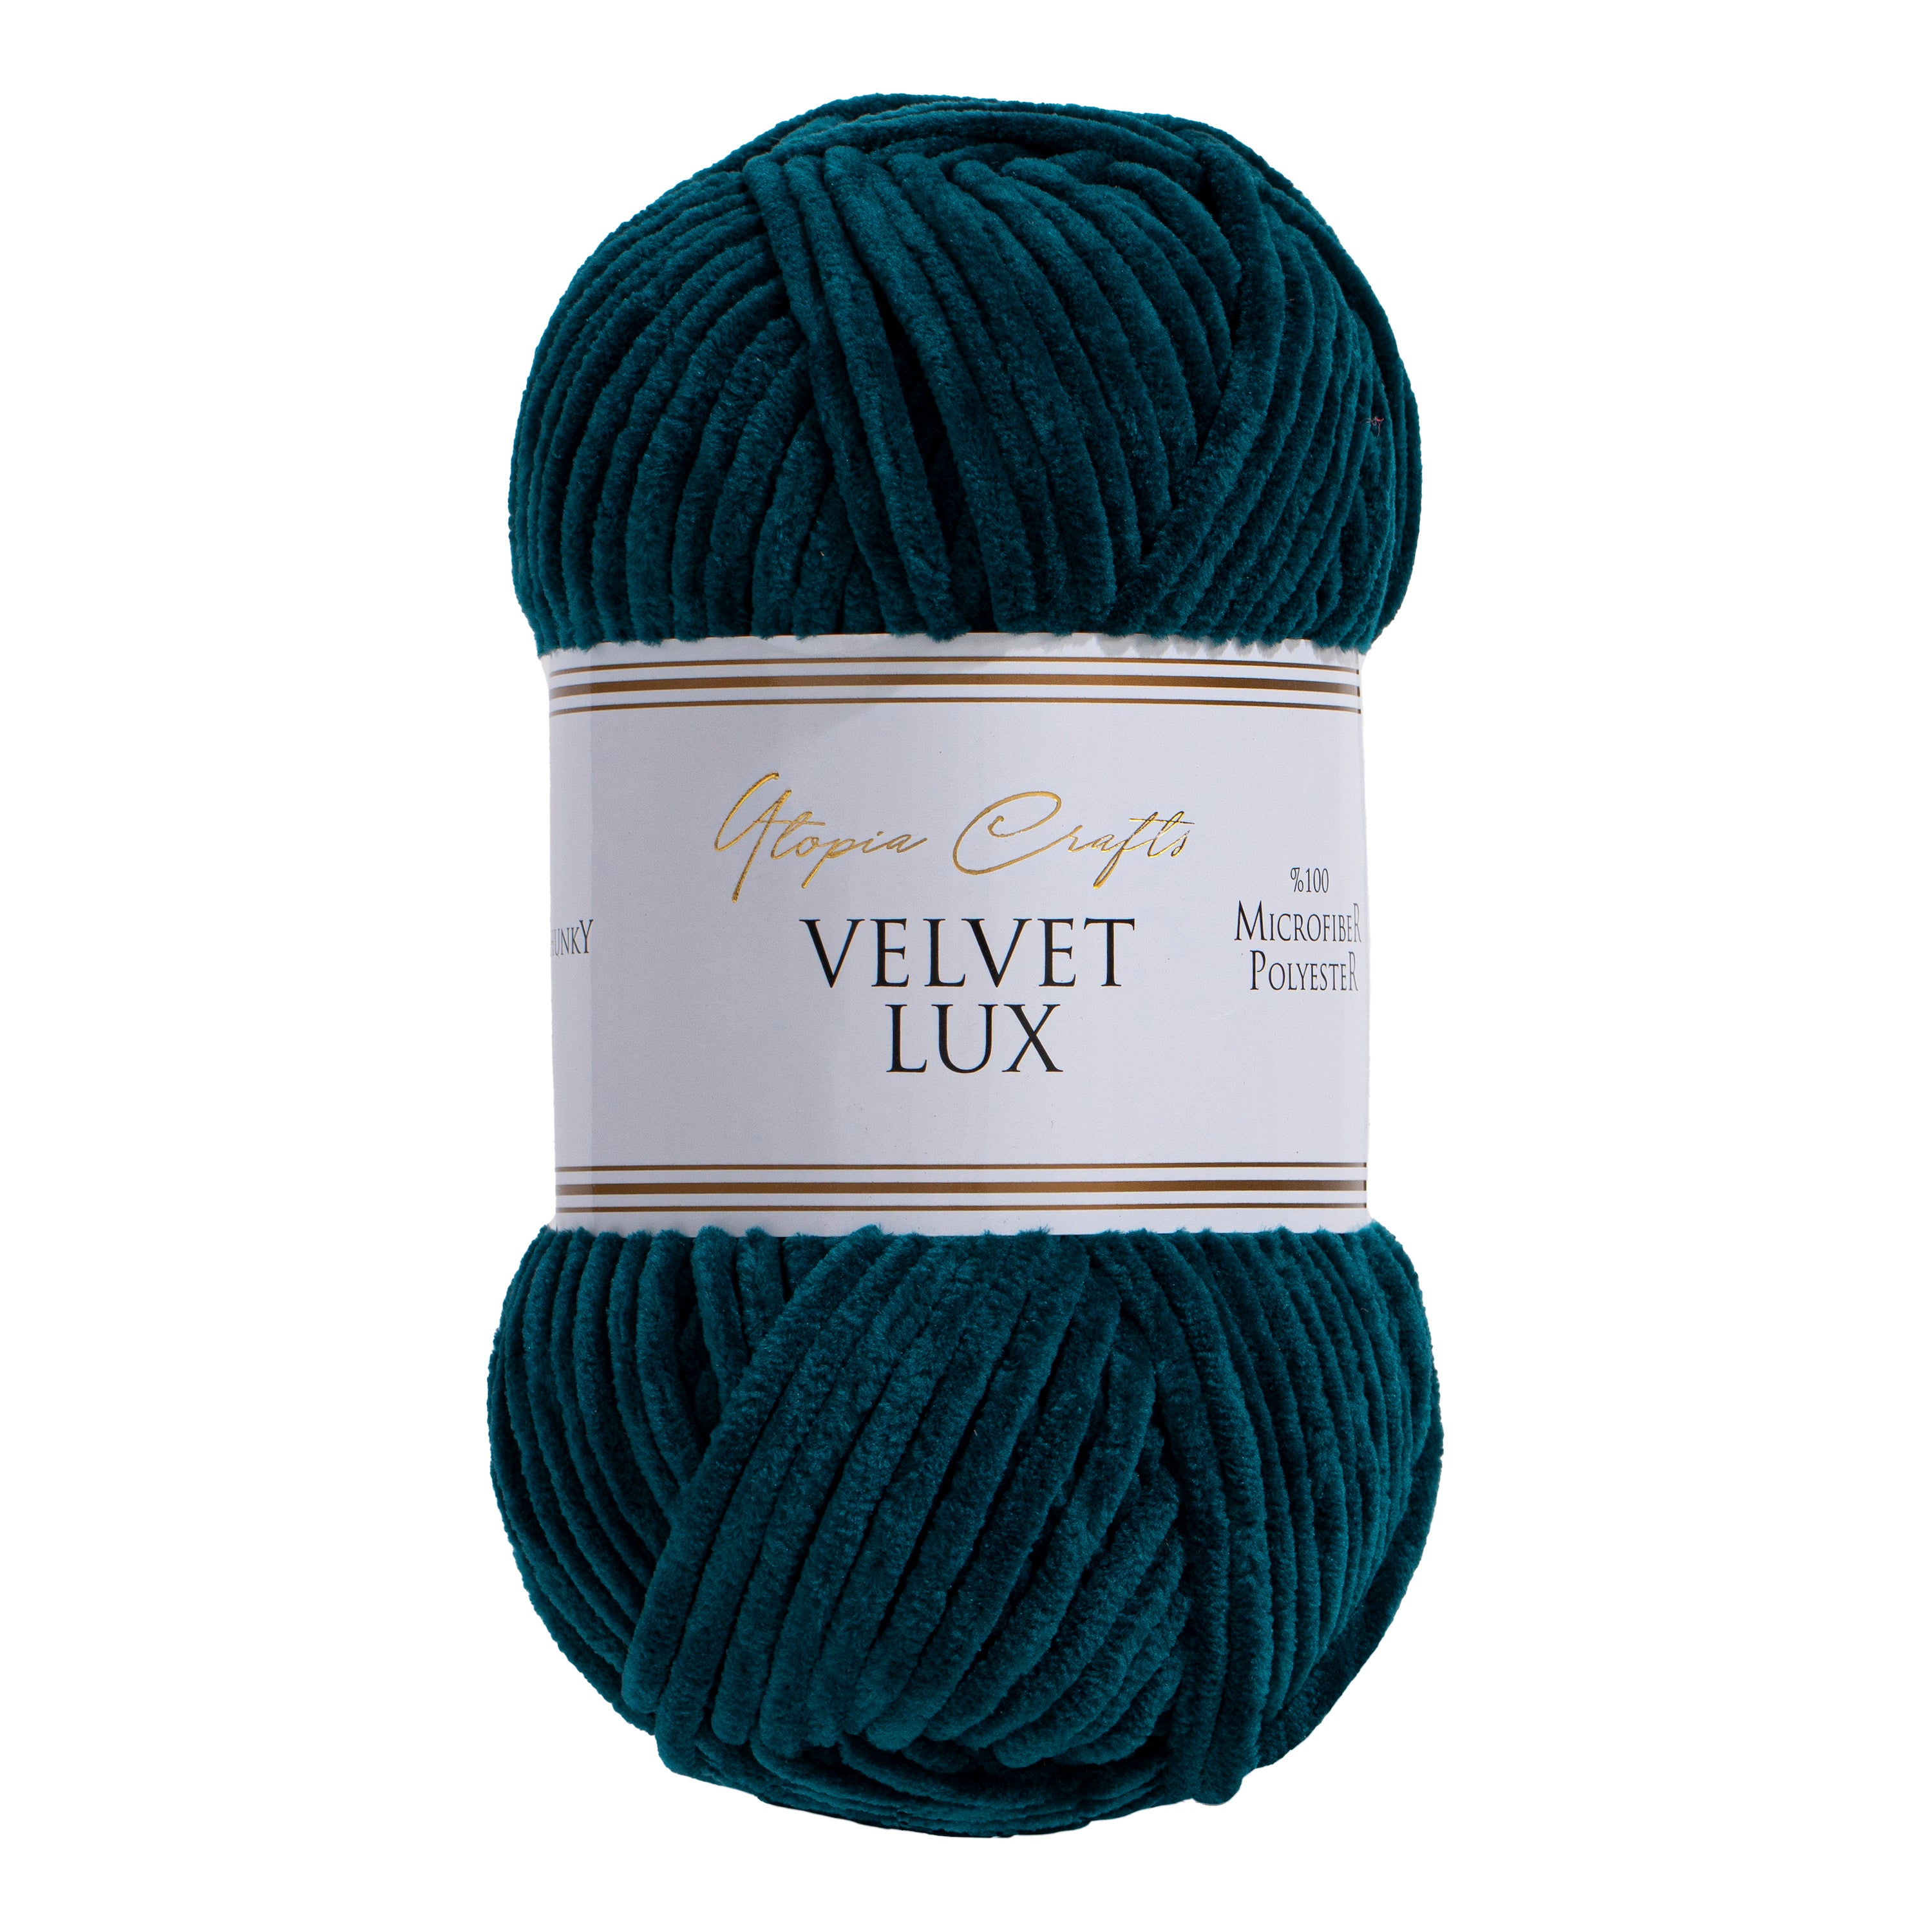 Utopia Crafts Velvet Lux Chenille Super Soft Chunky Yarn for Knitting and Crochet, 100g - 110m (Petrol Green)